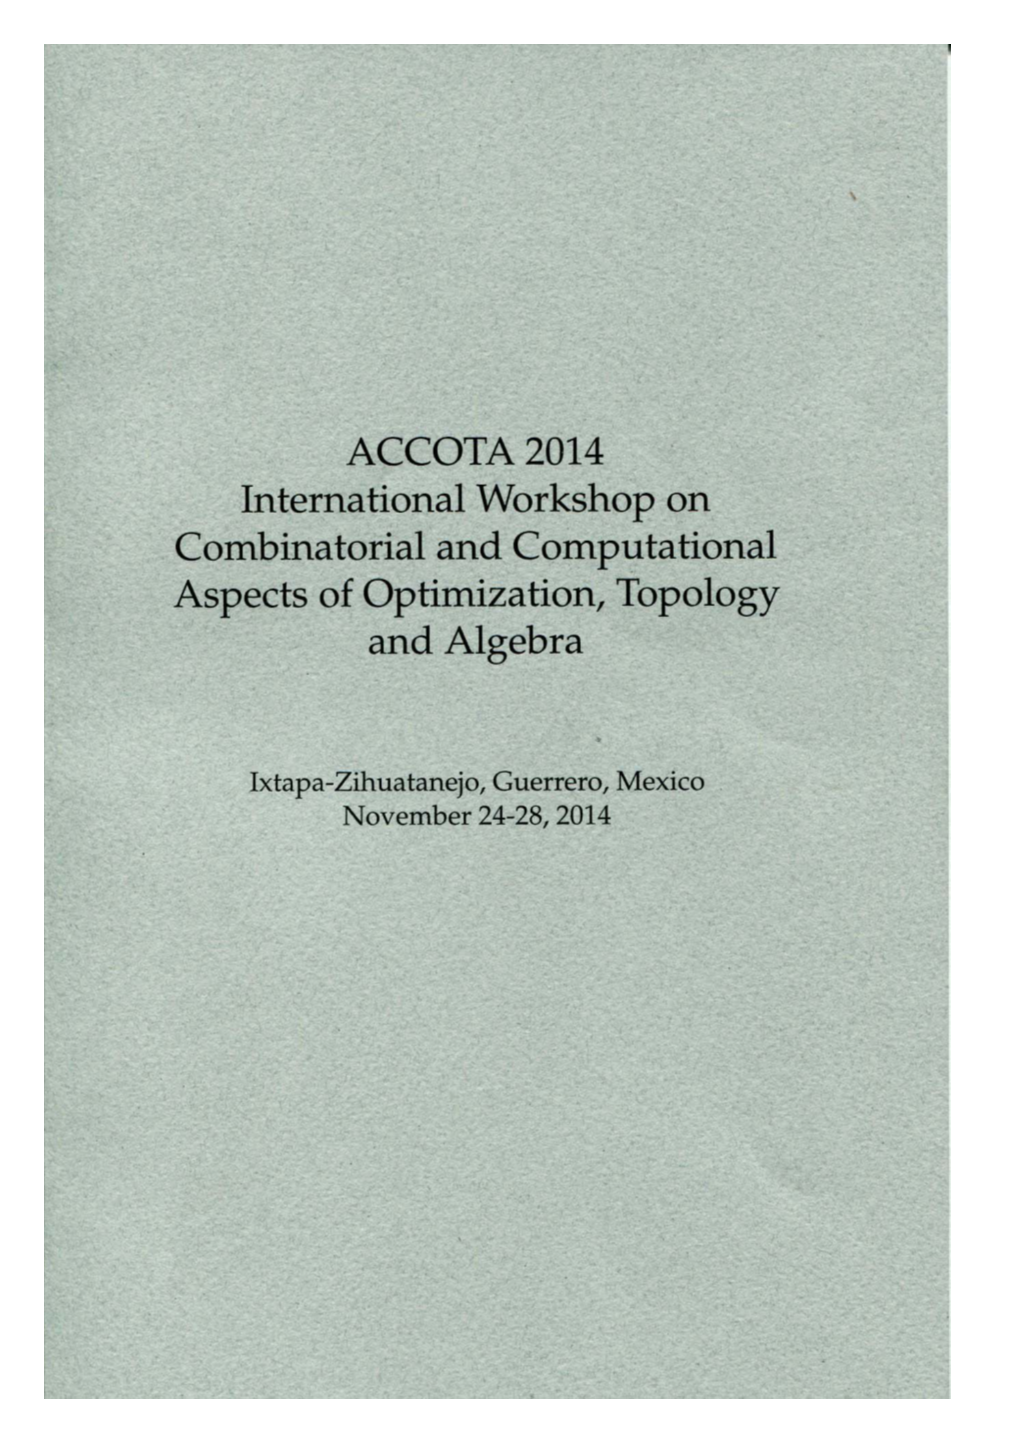 ACCOTA 2014 International Workshop on Combinatorial and Computational Aspects of Optimization, Topology and Algebra